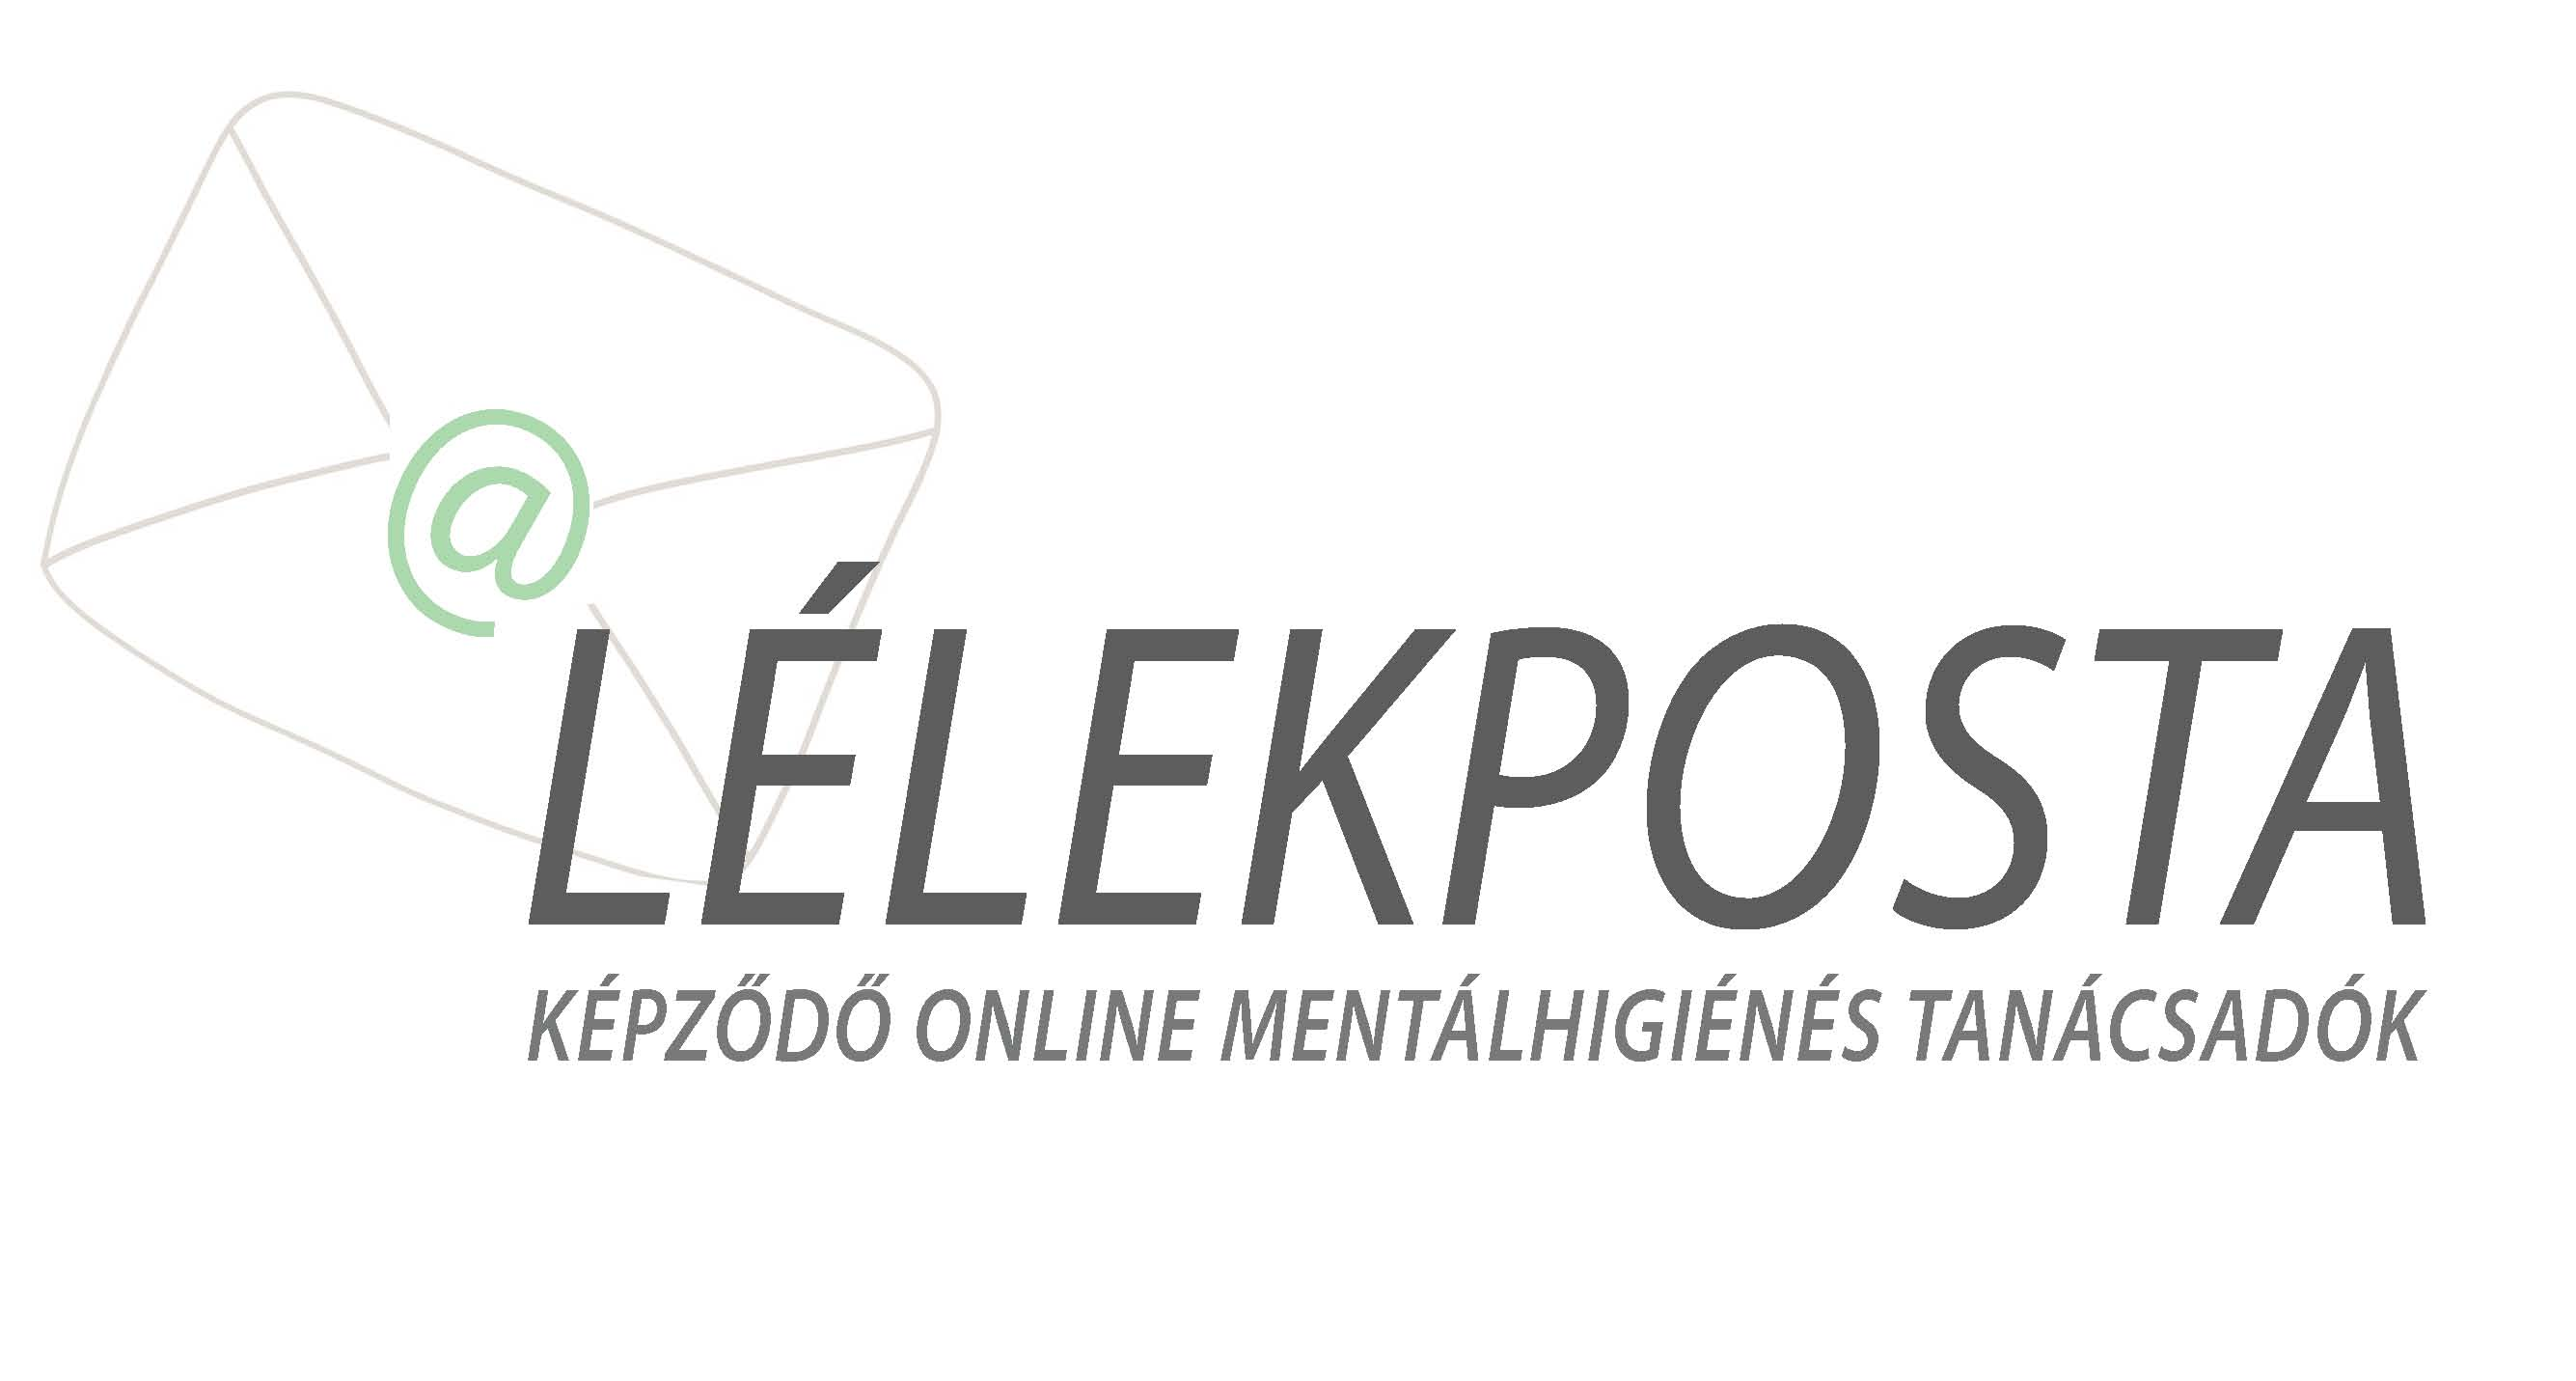 www.lelekposta.hu